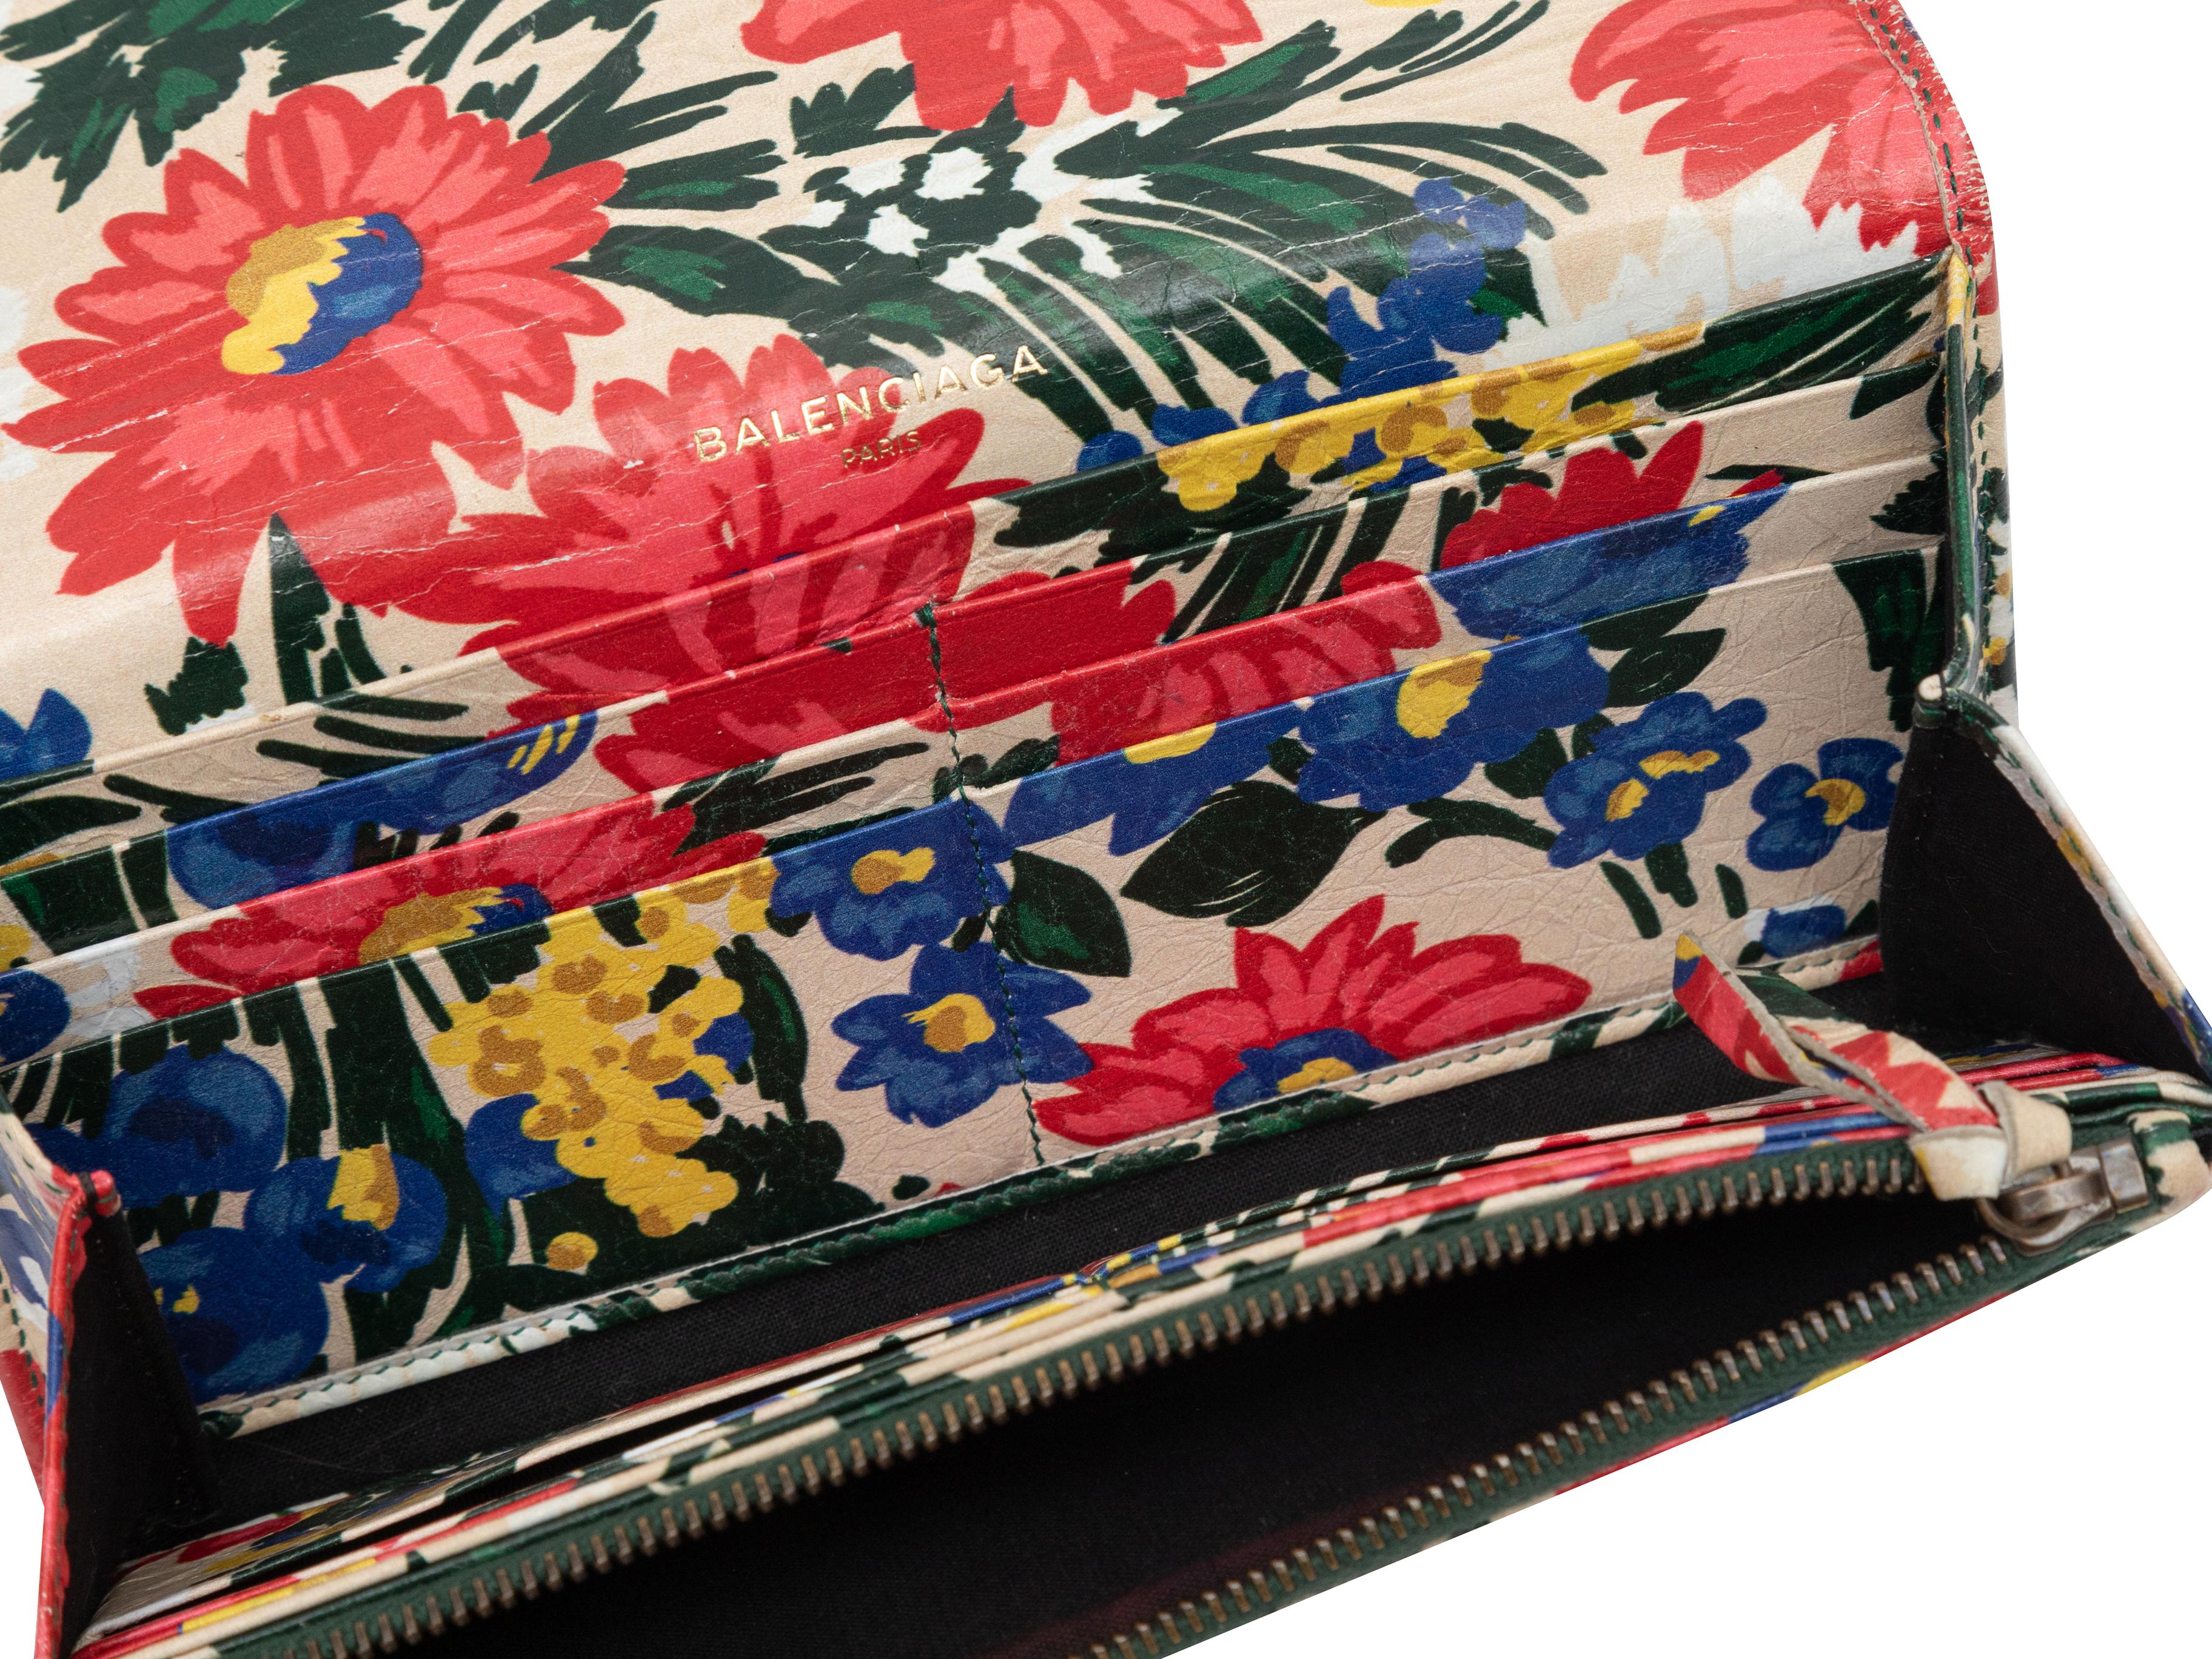 Multicolor Balenciaga Floral Print Moto Wallet In Good Condition For Sale In New York, NY